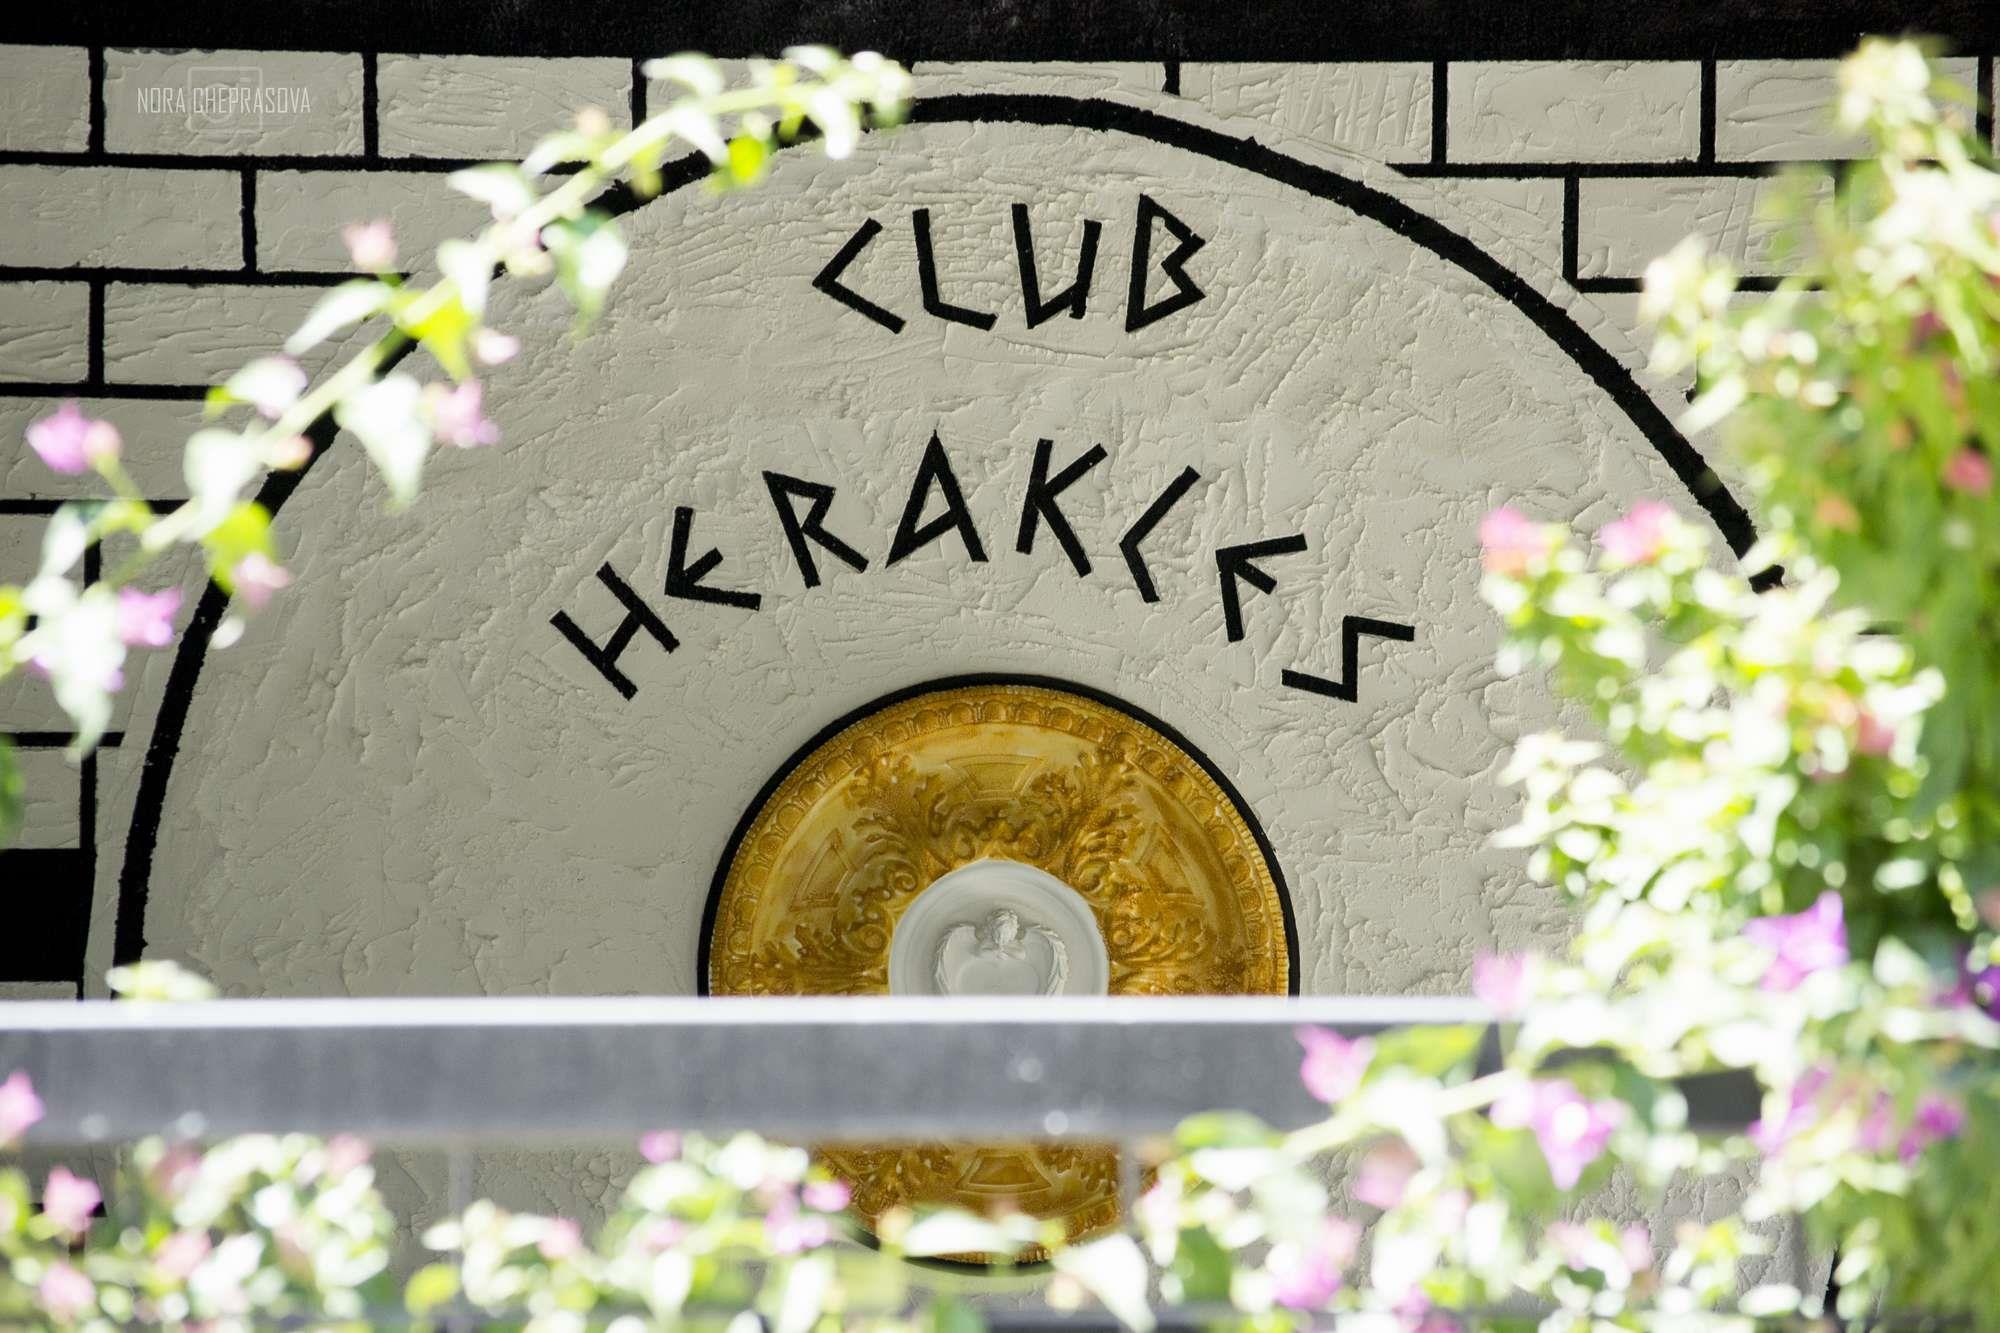 Club Herakles Hotel 3*